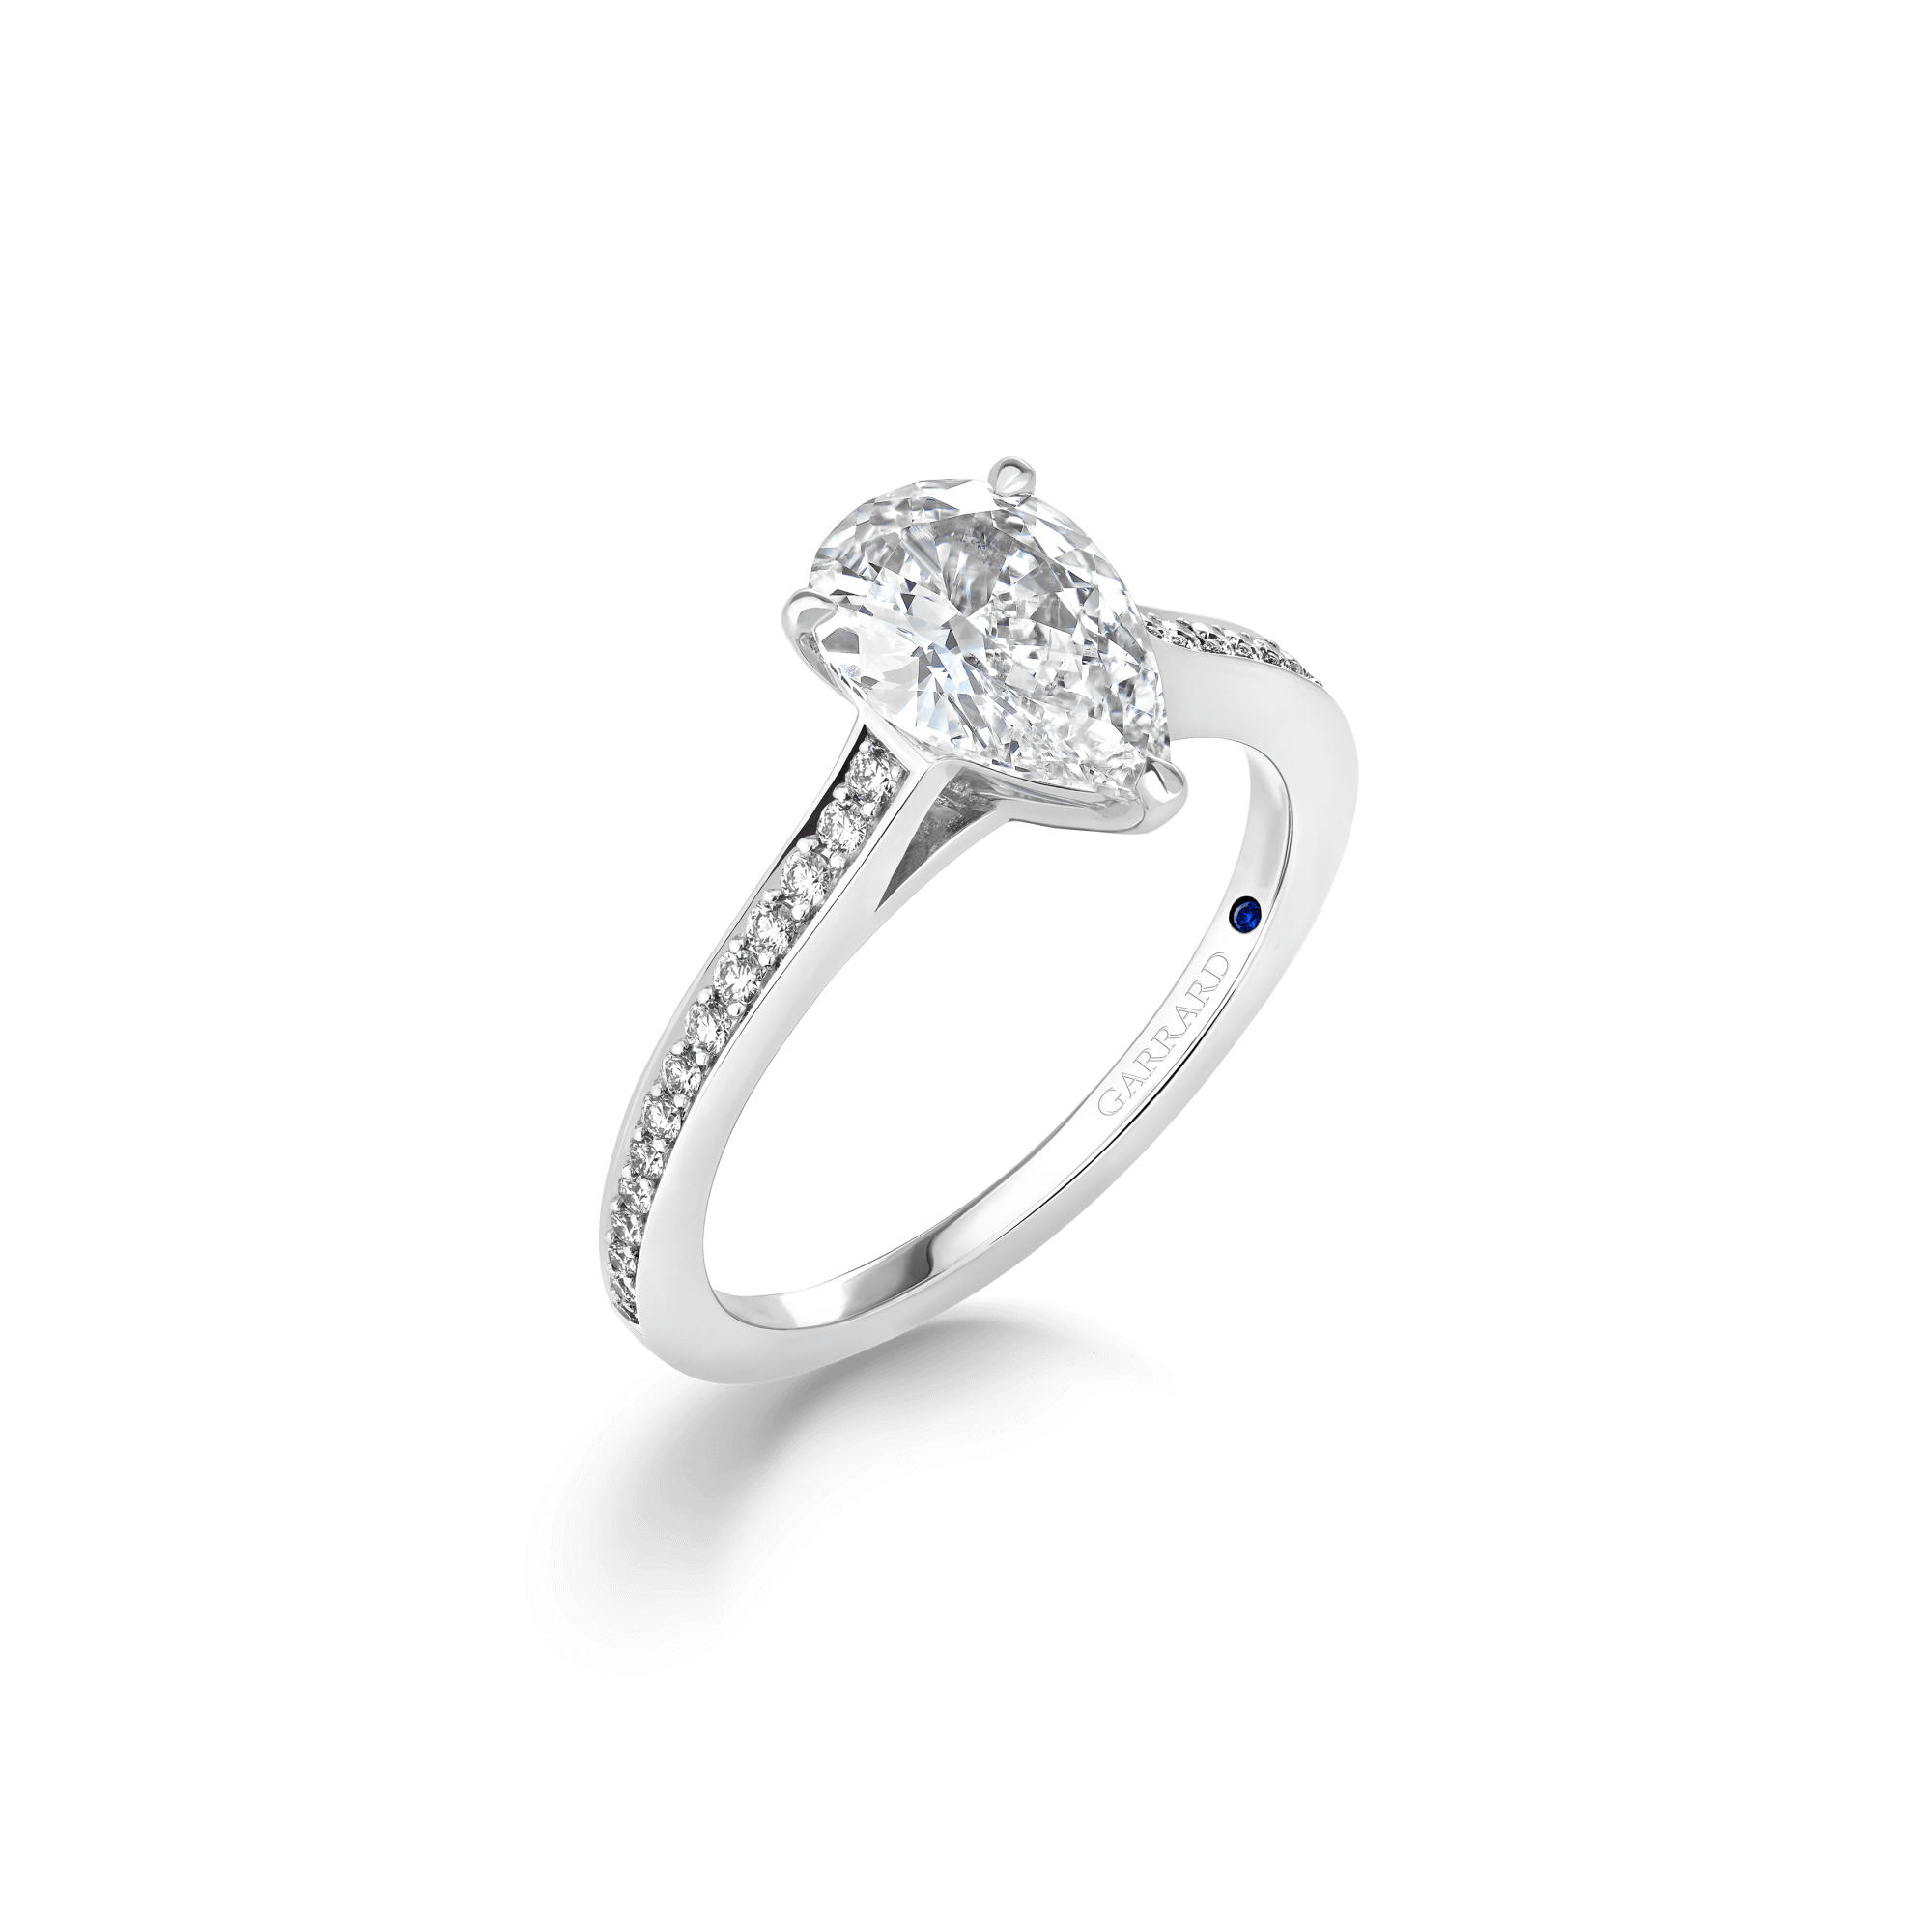 18ct White Gold Sapphire & Diamond Halo Ring UK Size N, US 6.75 - Ruby Lane